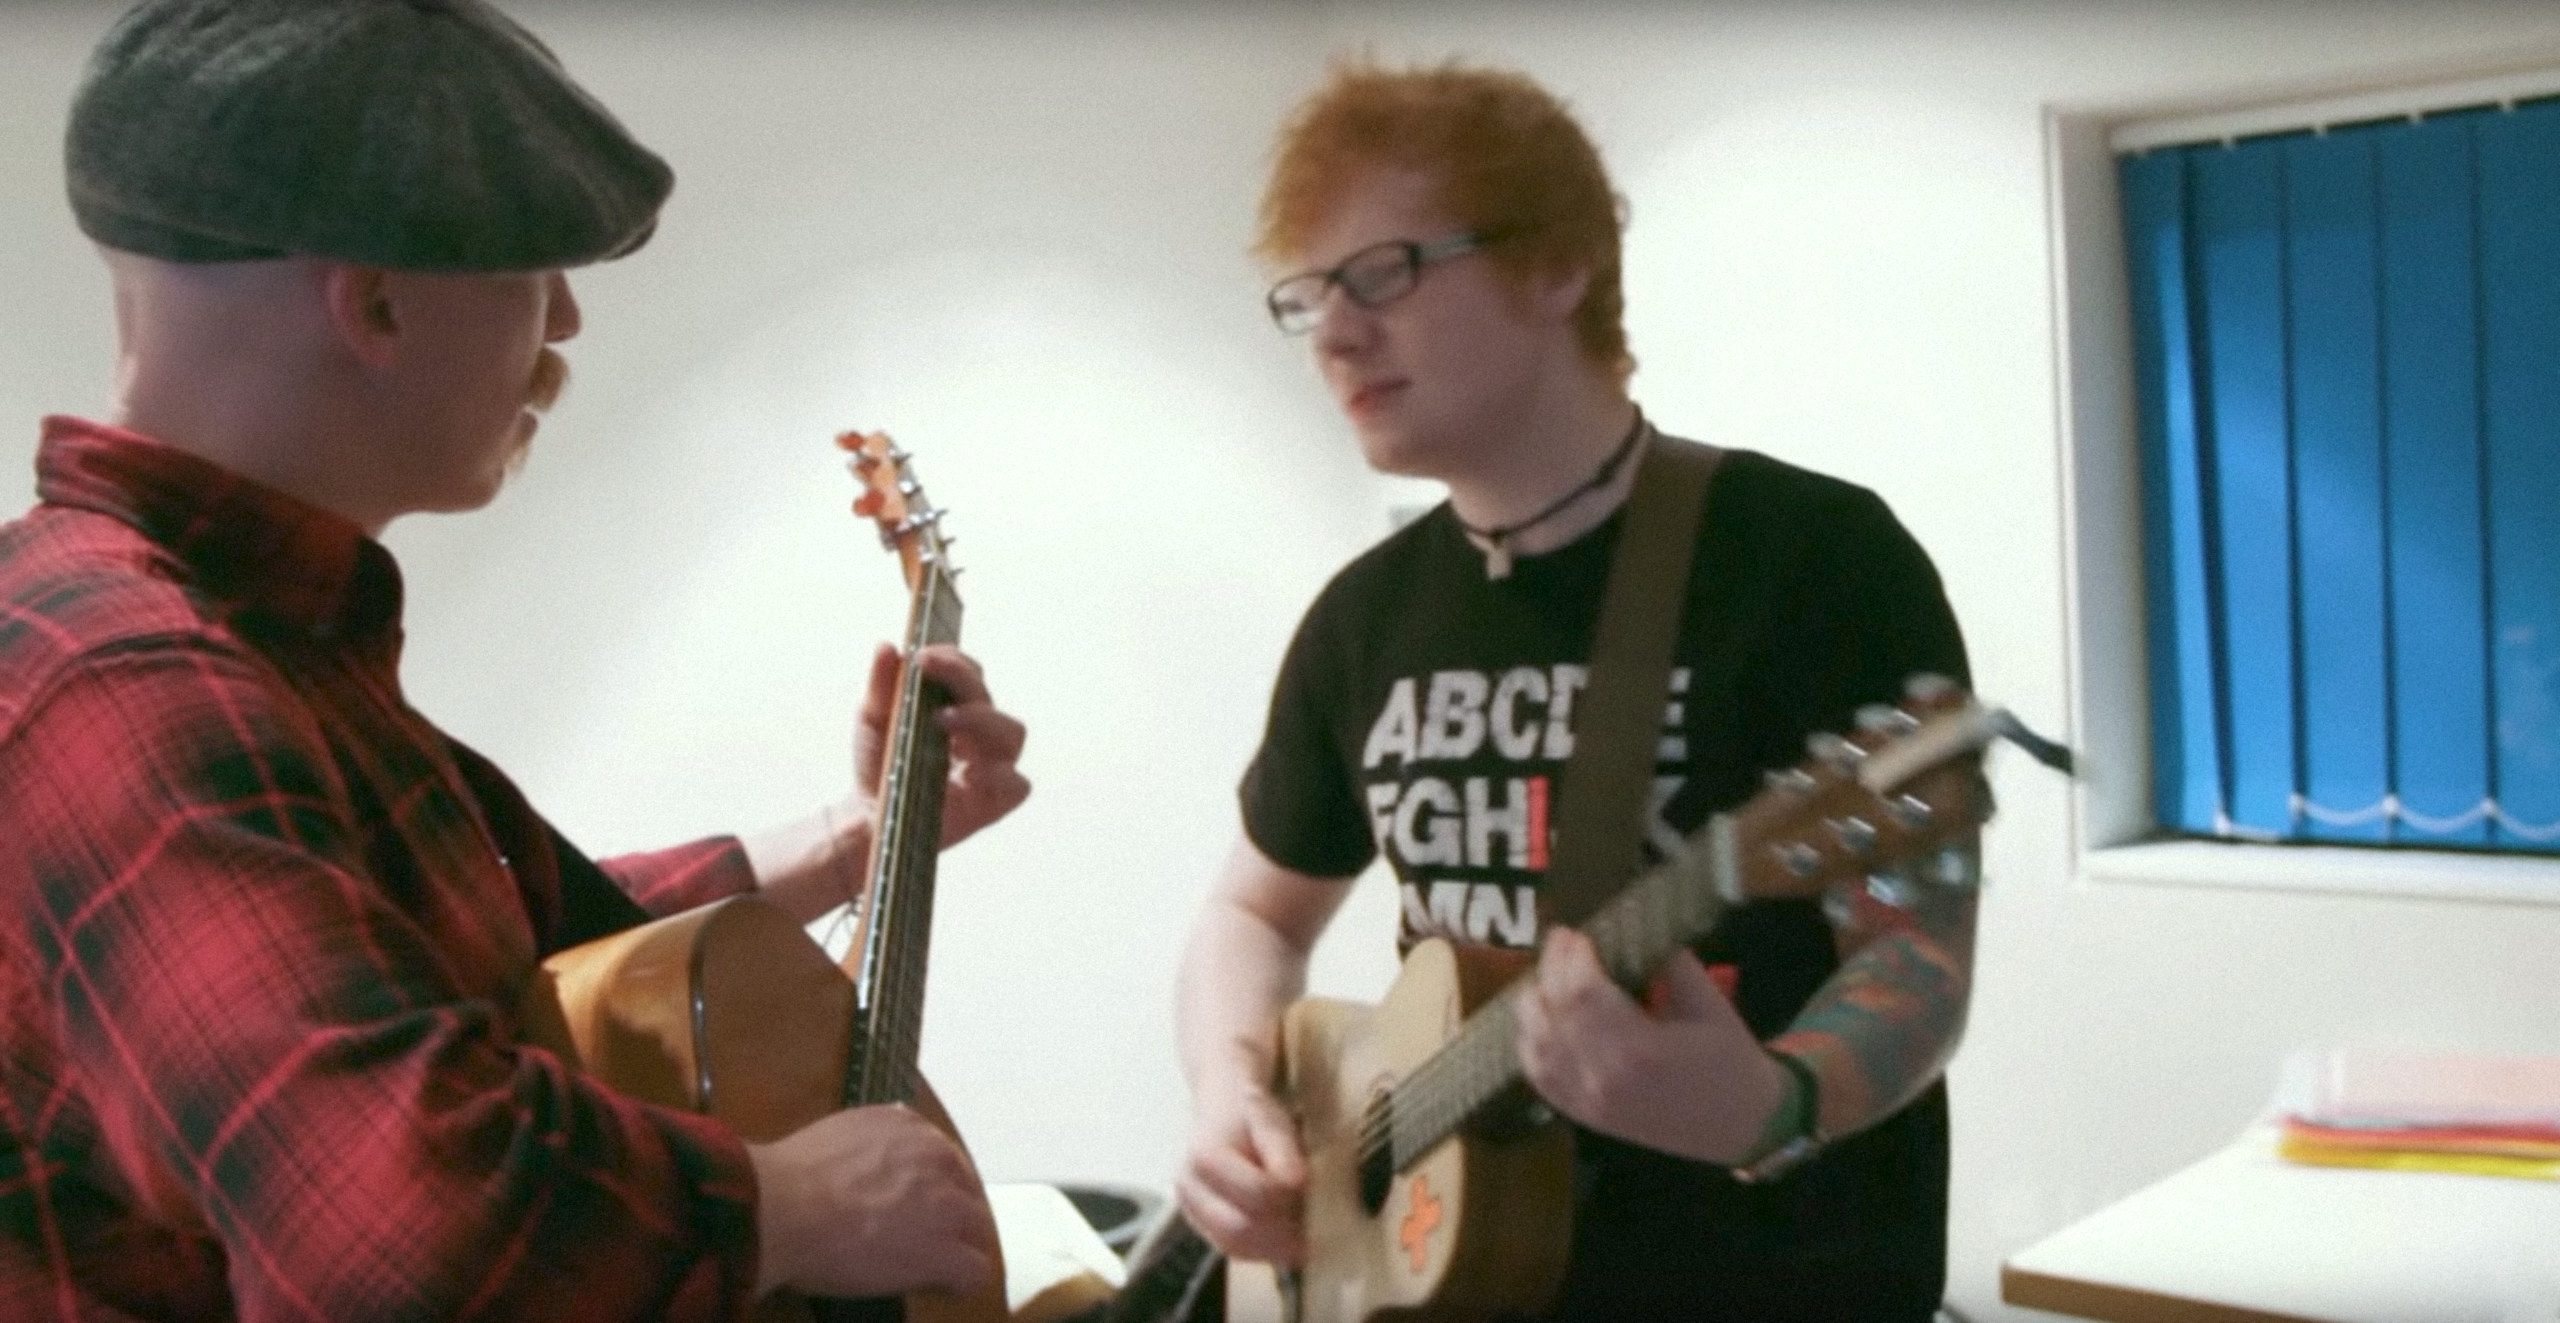 Foy Vance and Ed Sheeran play guitars together